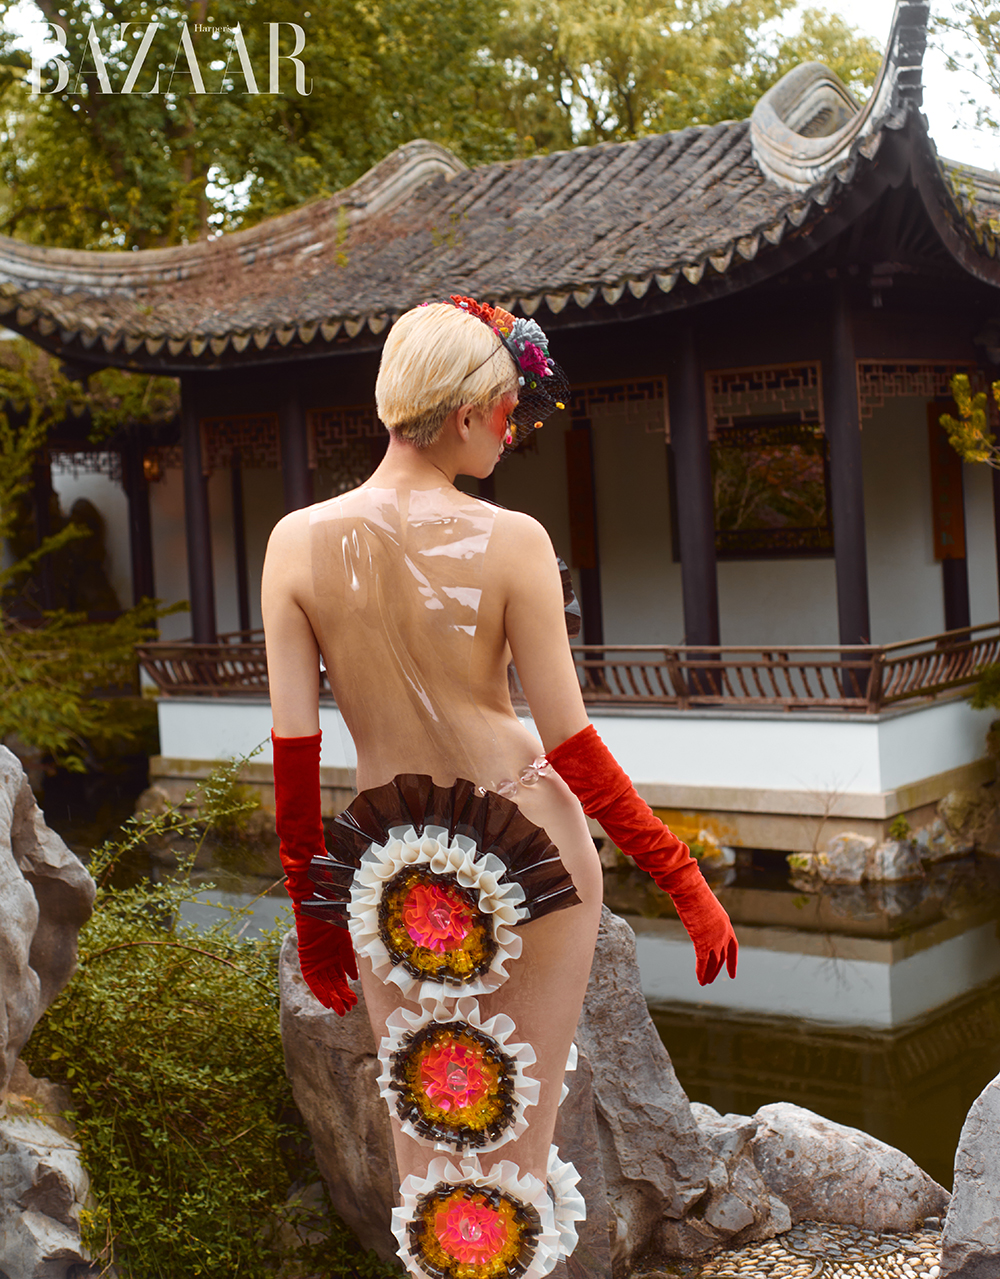 Chinese Scholar Garden | Photo by Tatiana Luna 5